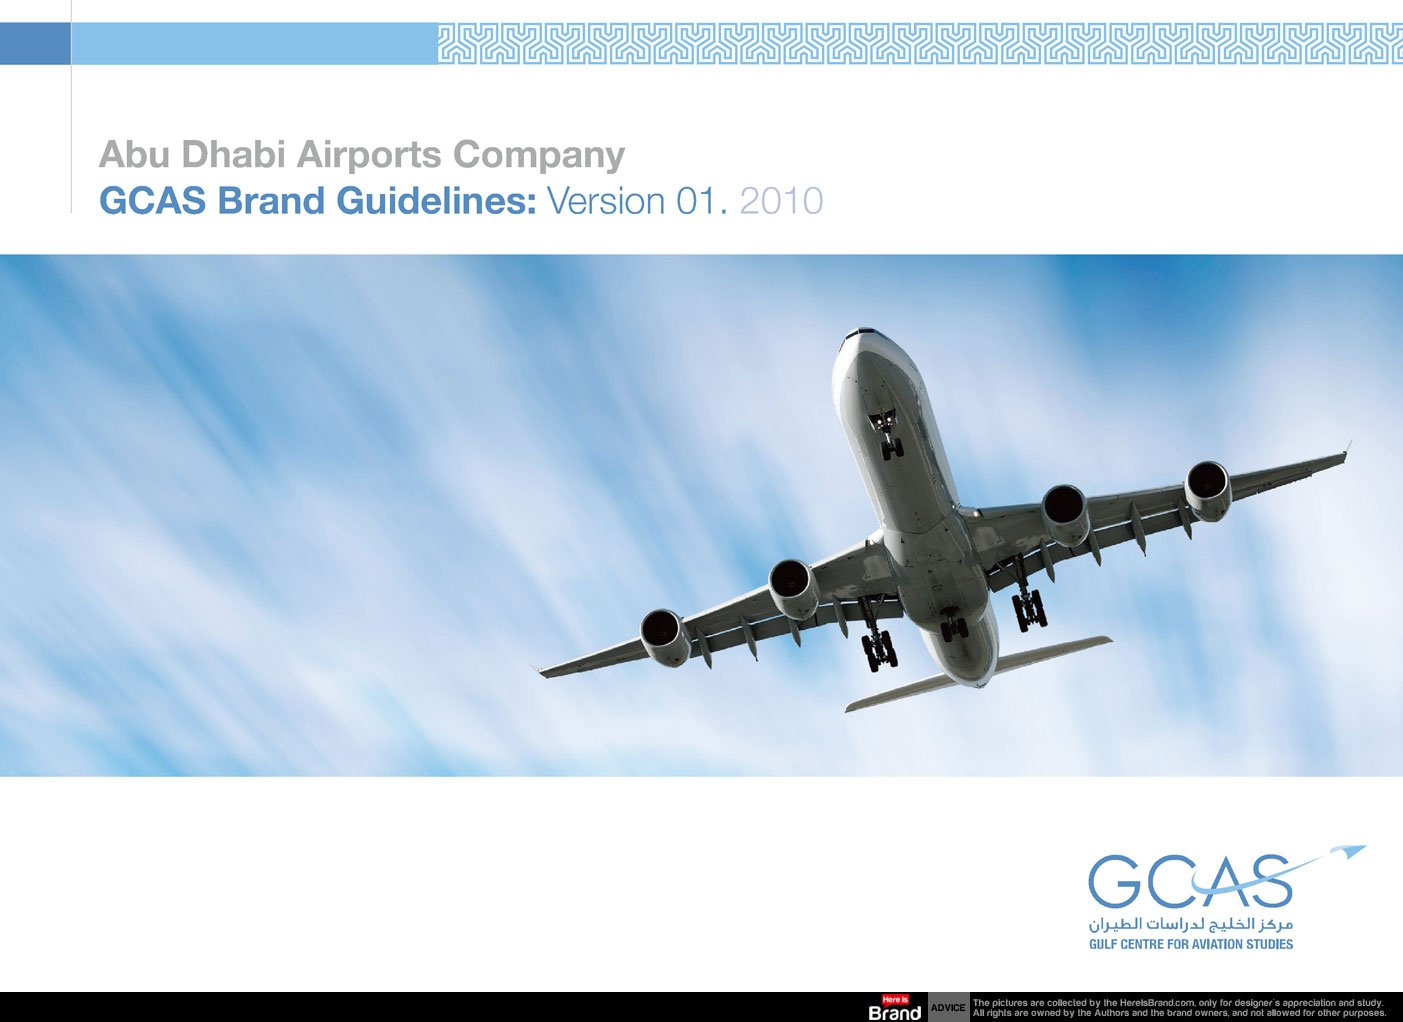 GCAS brand guidelines